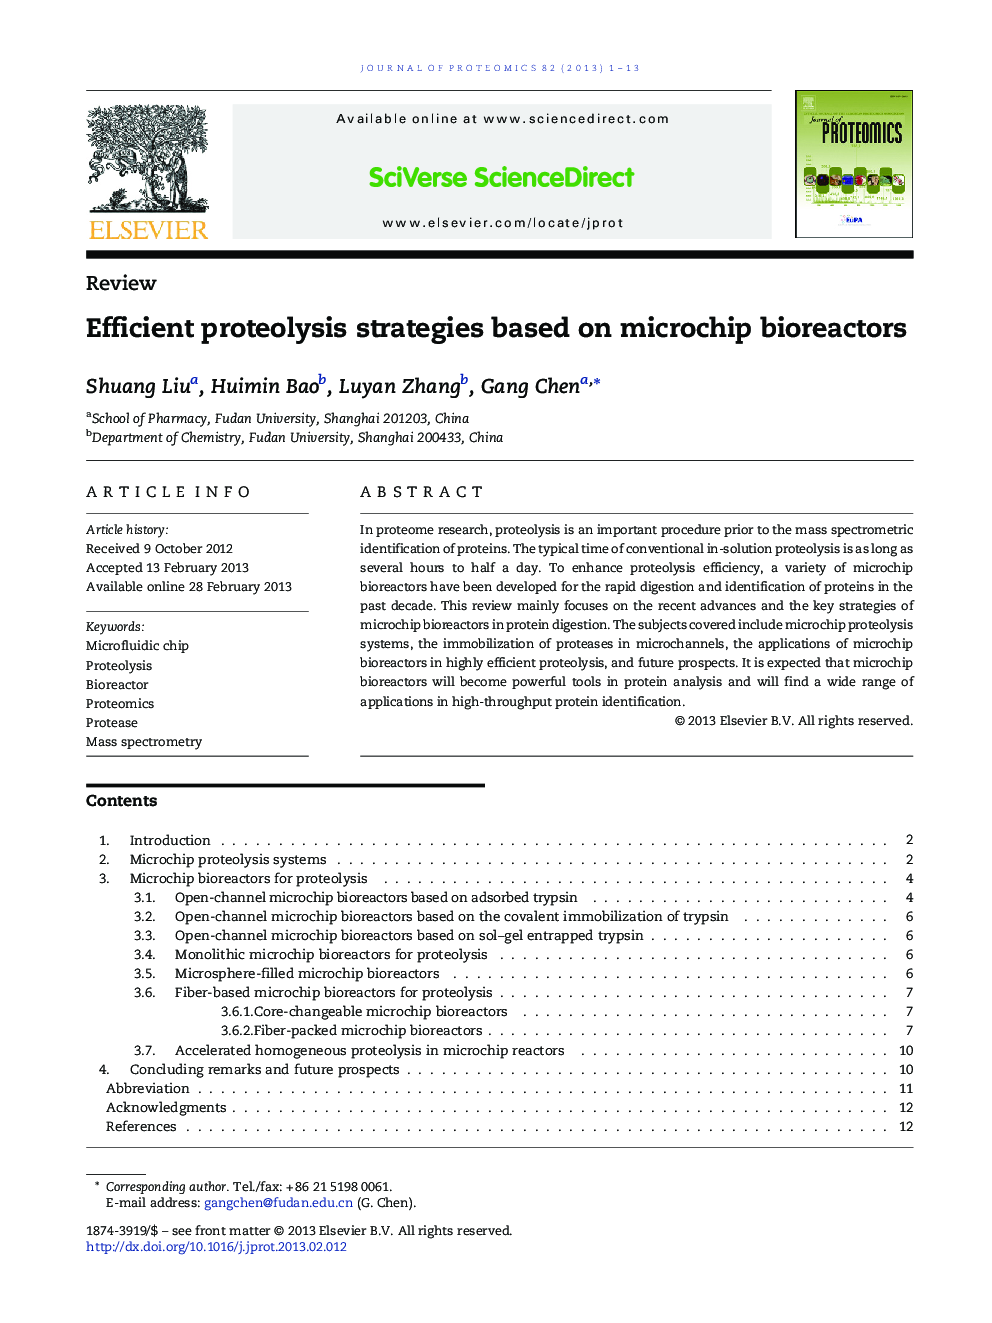 Efficient proteolysis strategies based on microchip bioreactors